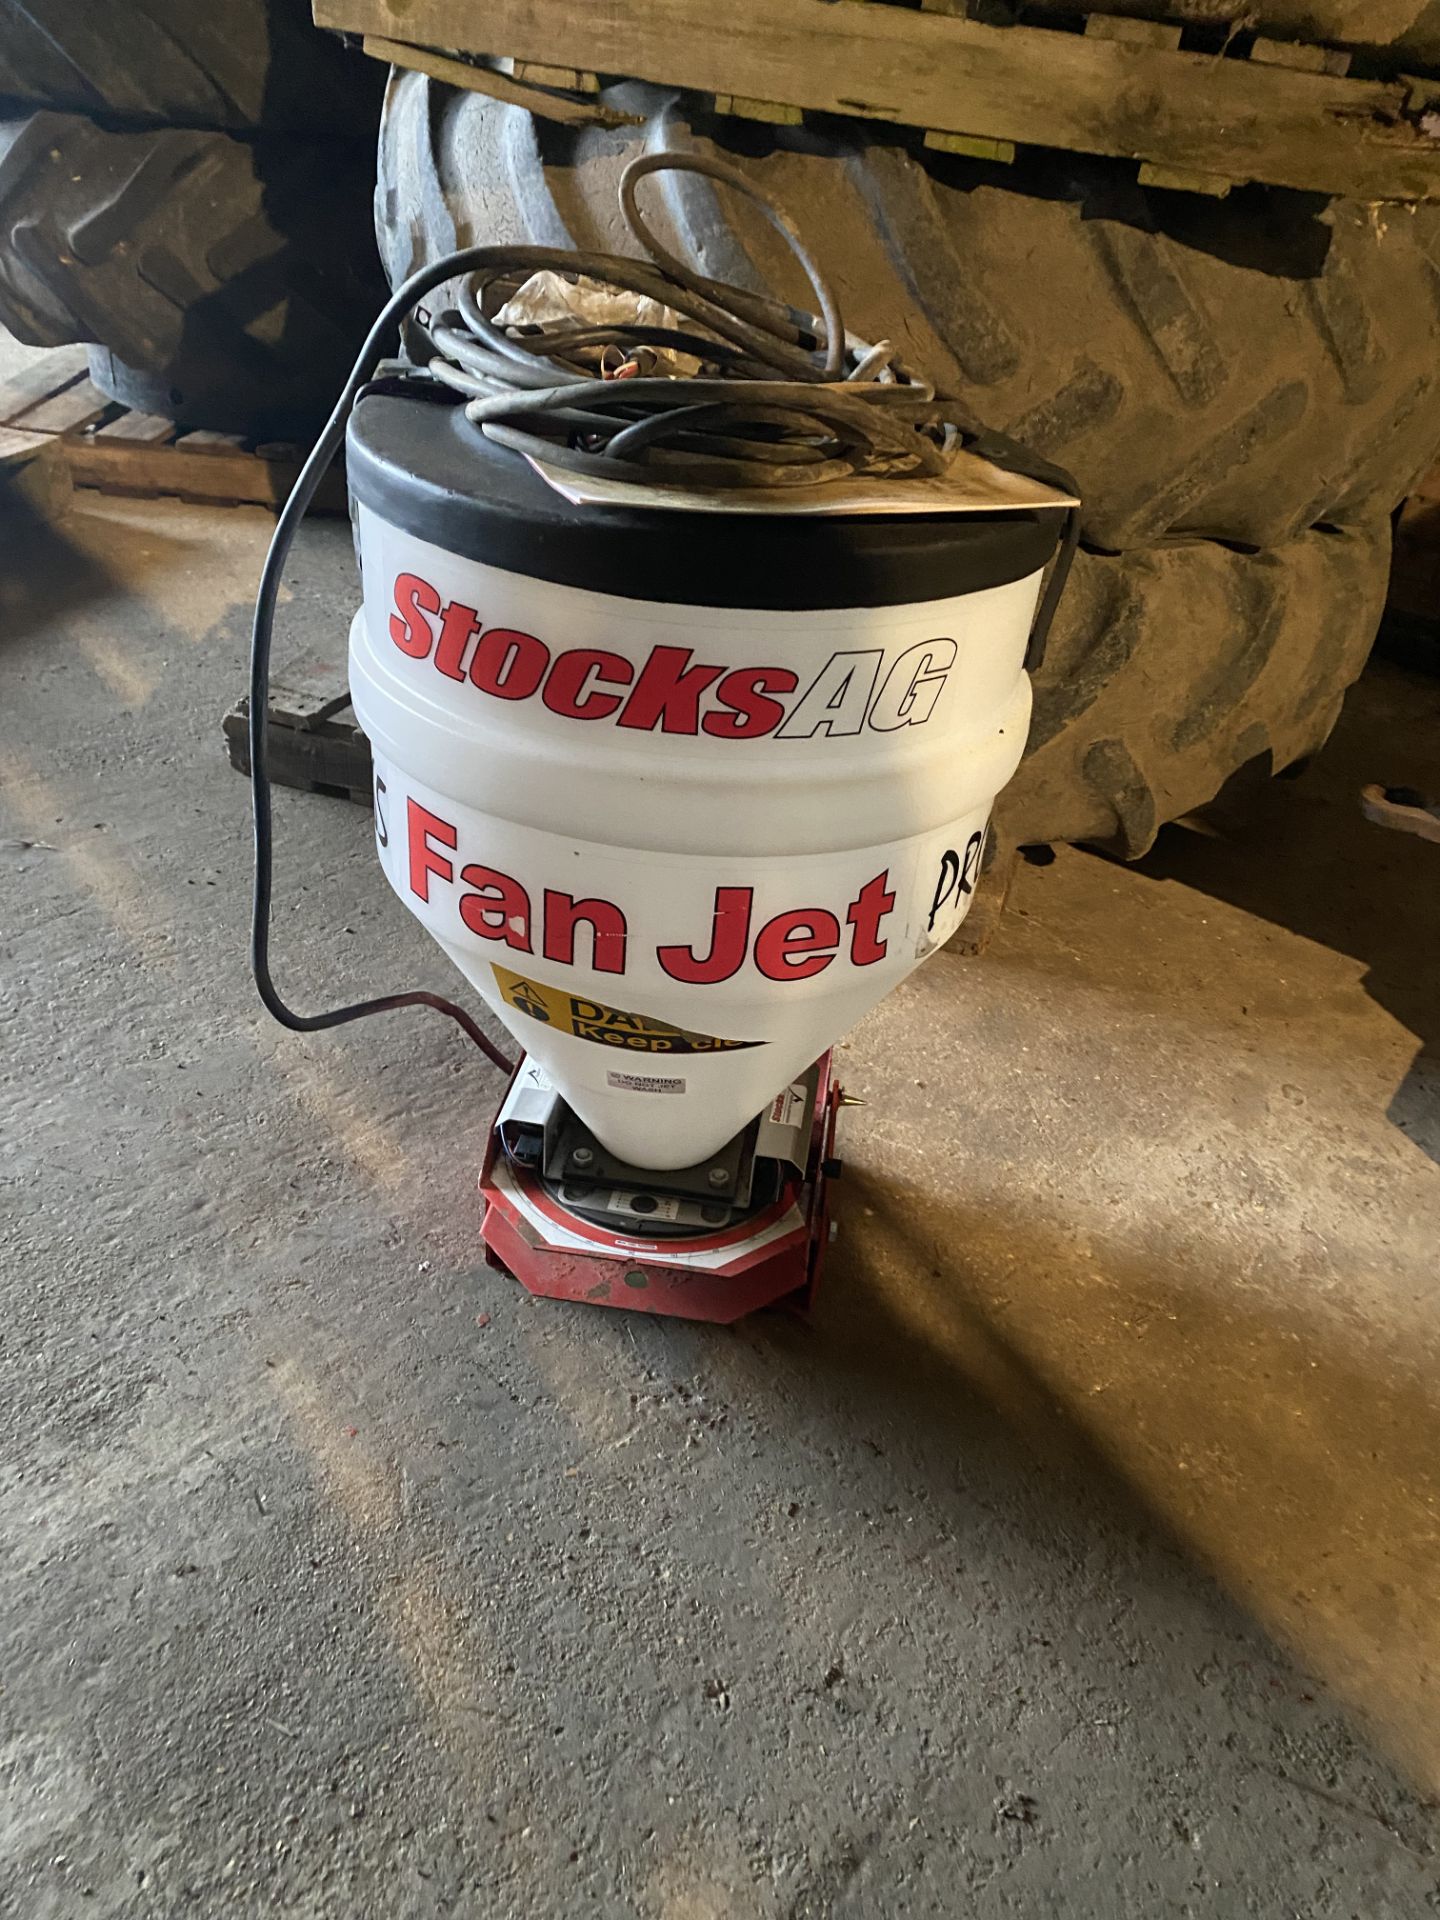 StocksAG Fan Jet Pro 65 slug pellet applicator, manual & control box in office